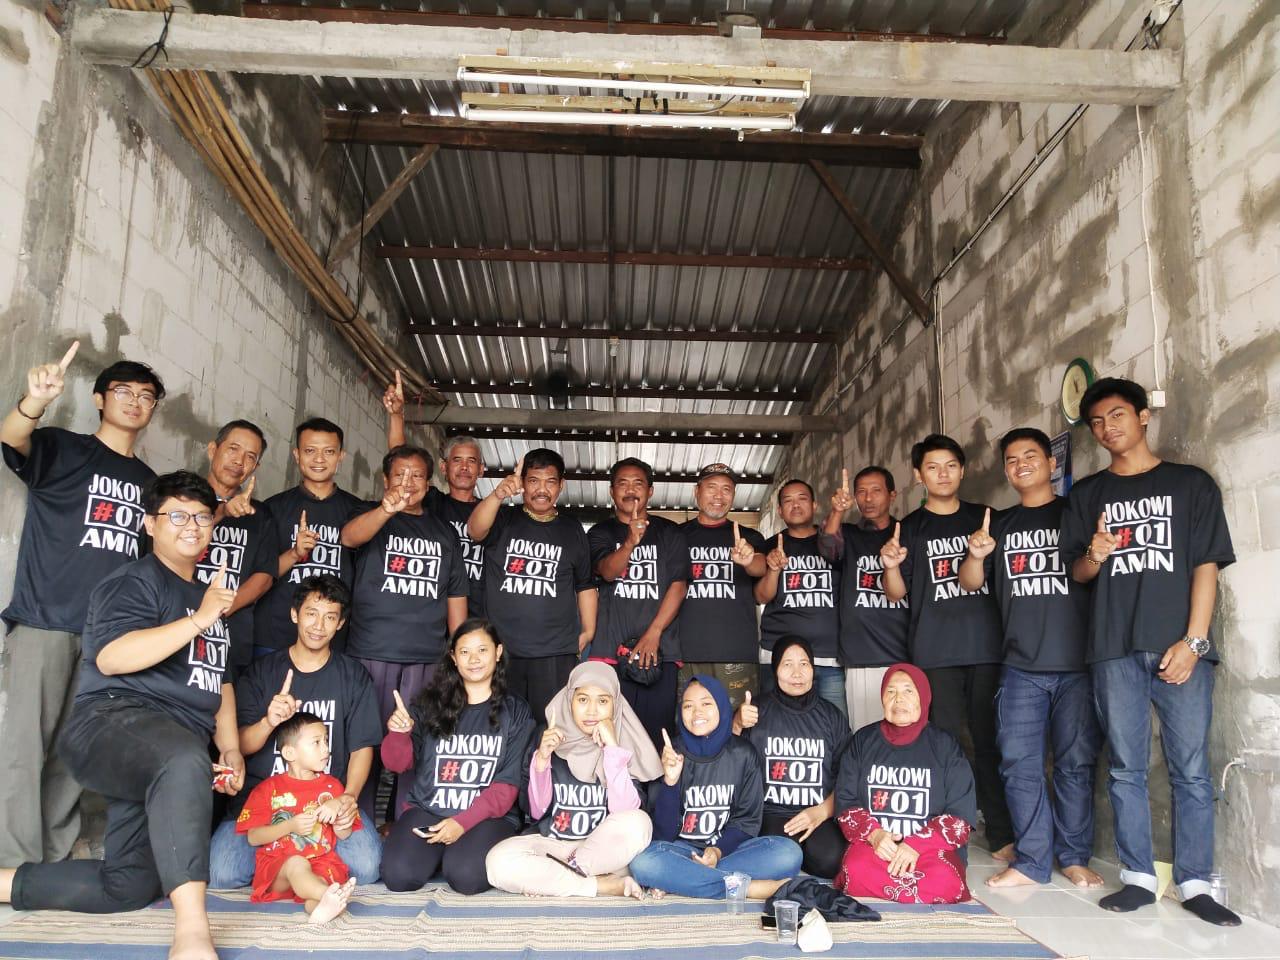 Pemuda Surabaya Bersatu kampanyekan program paslon 01 dari kampung ke kampung. (Dok. Pemuda Surabaya Bersatu)